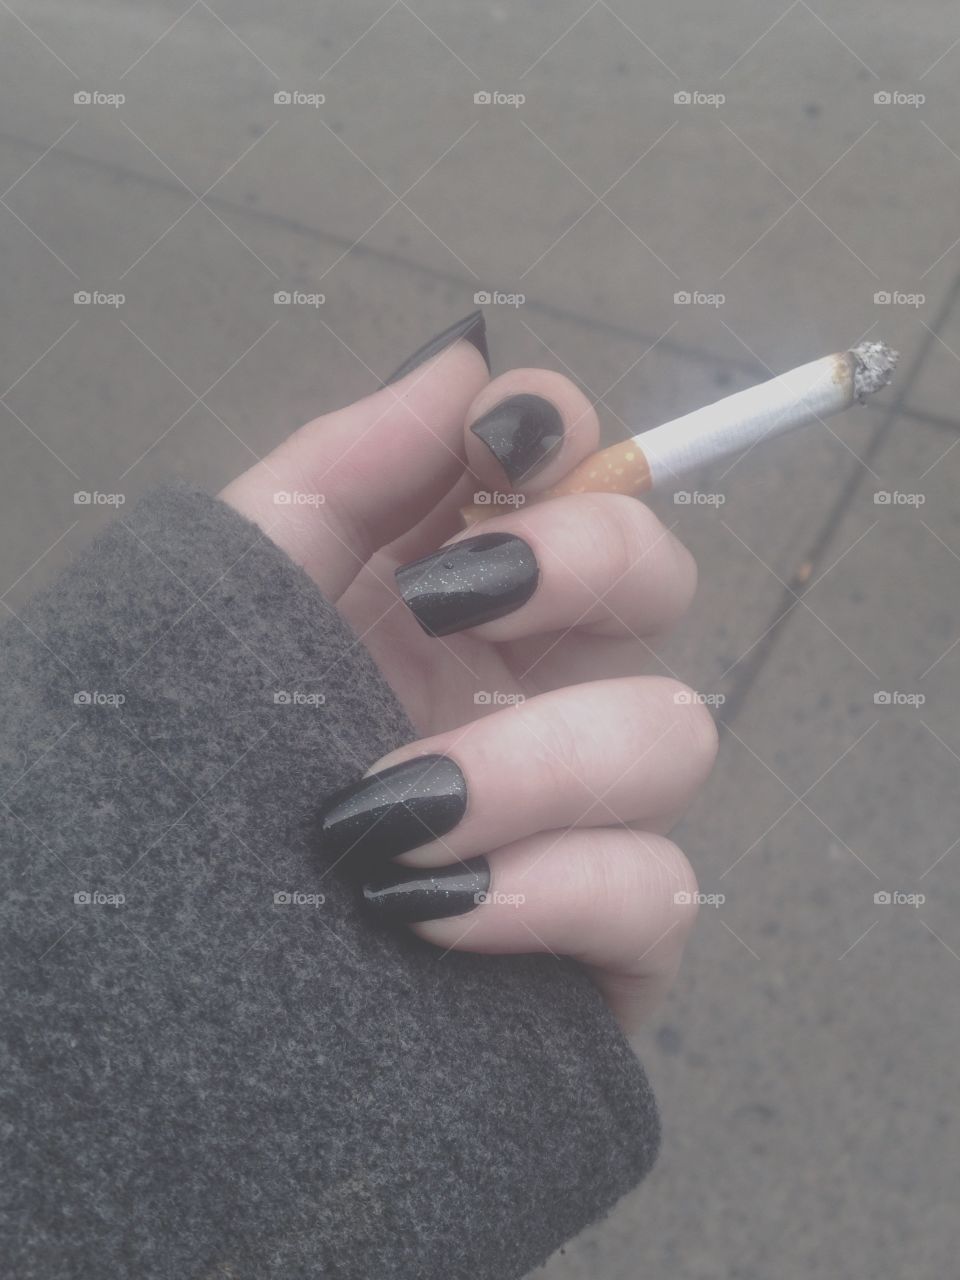 Nails and a smoke